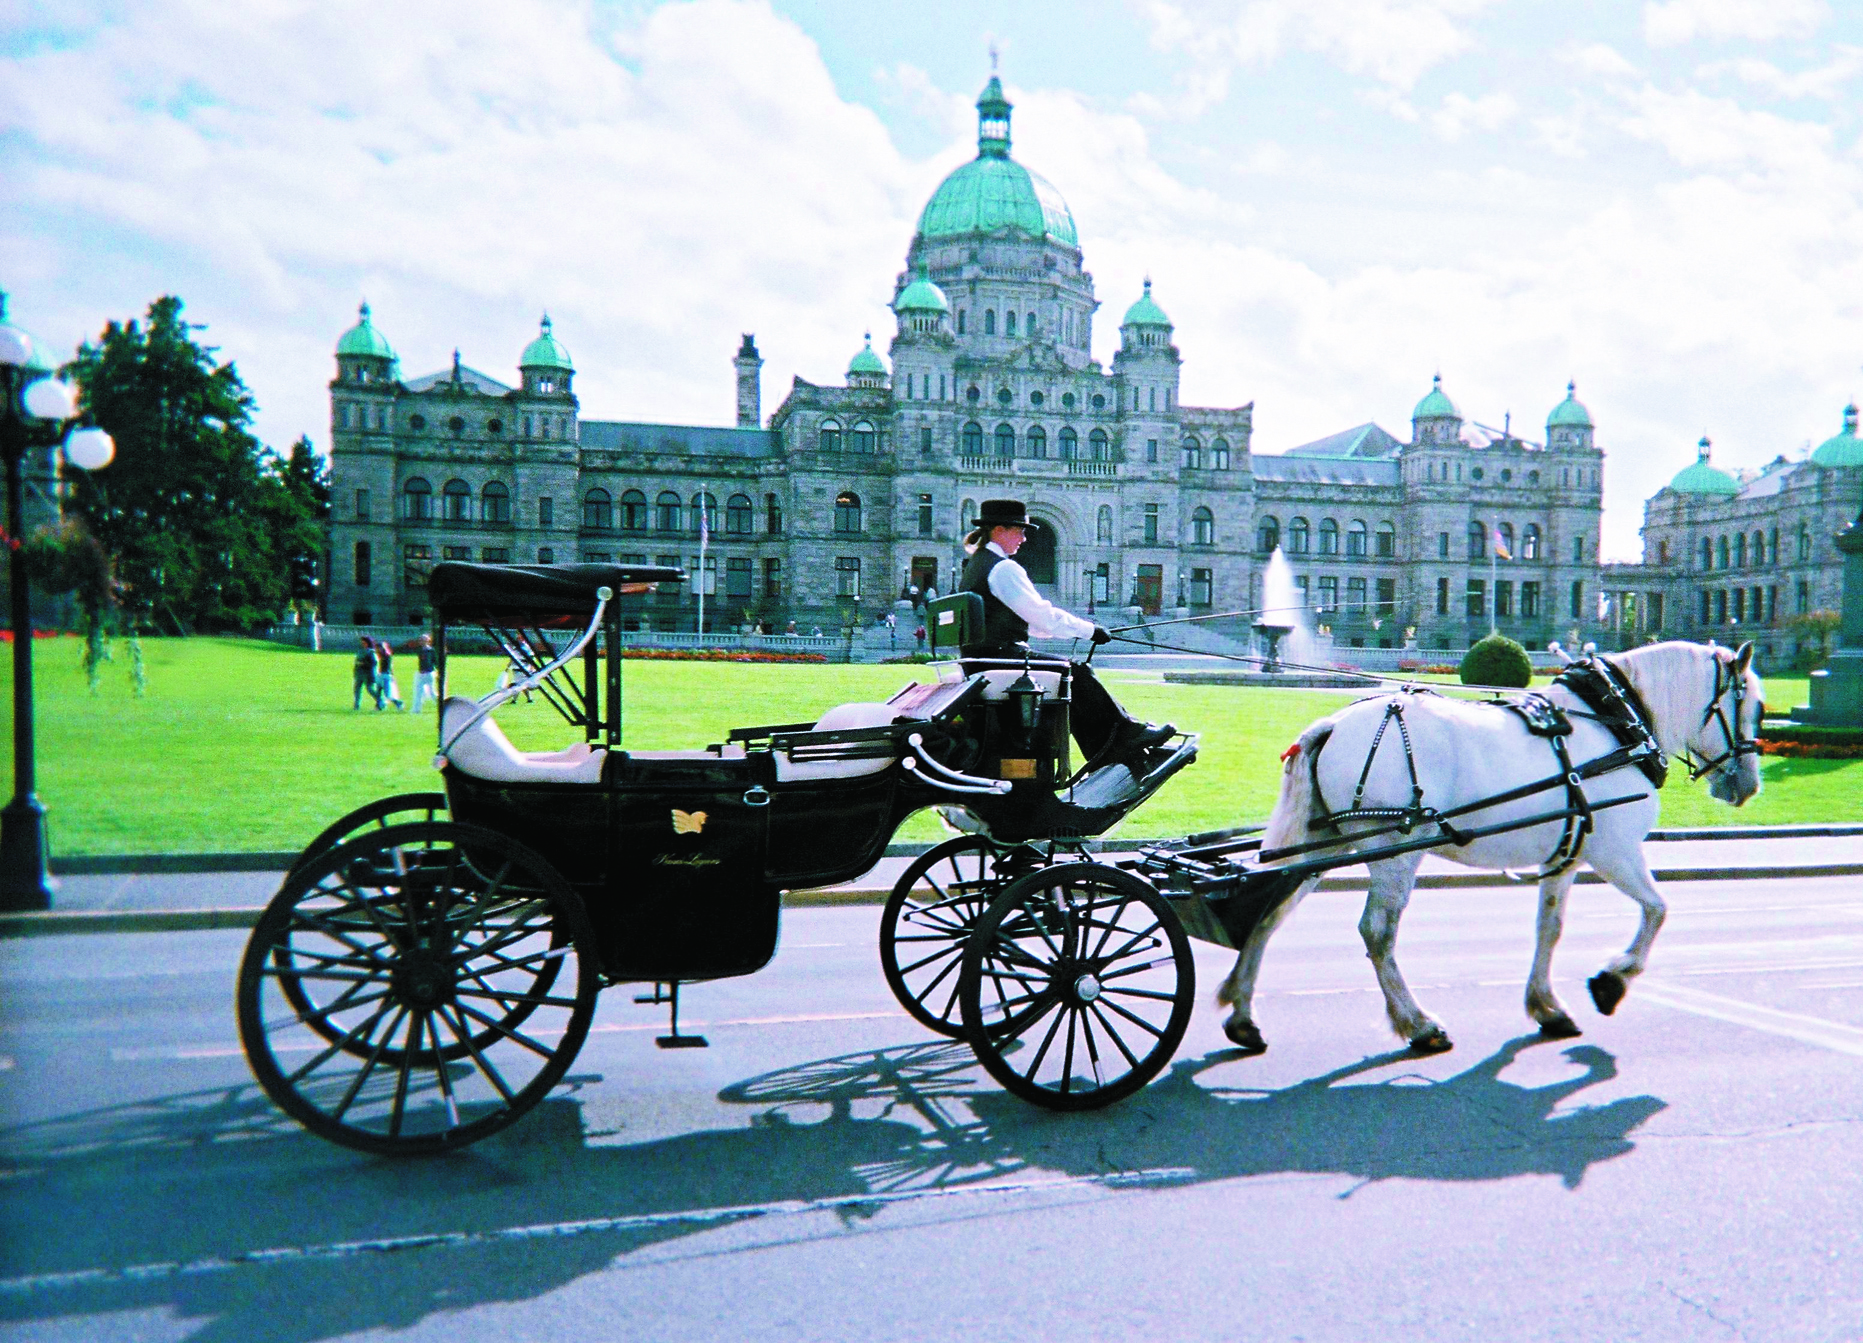 Victoria romantic dates, Victoria tourism, Vancouver Island activities, Victoria carriage rides